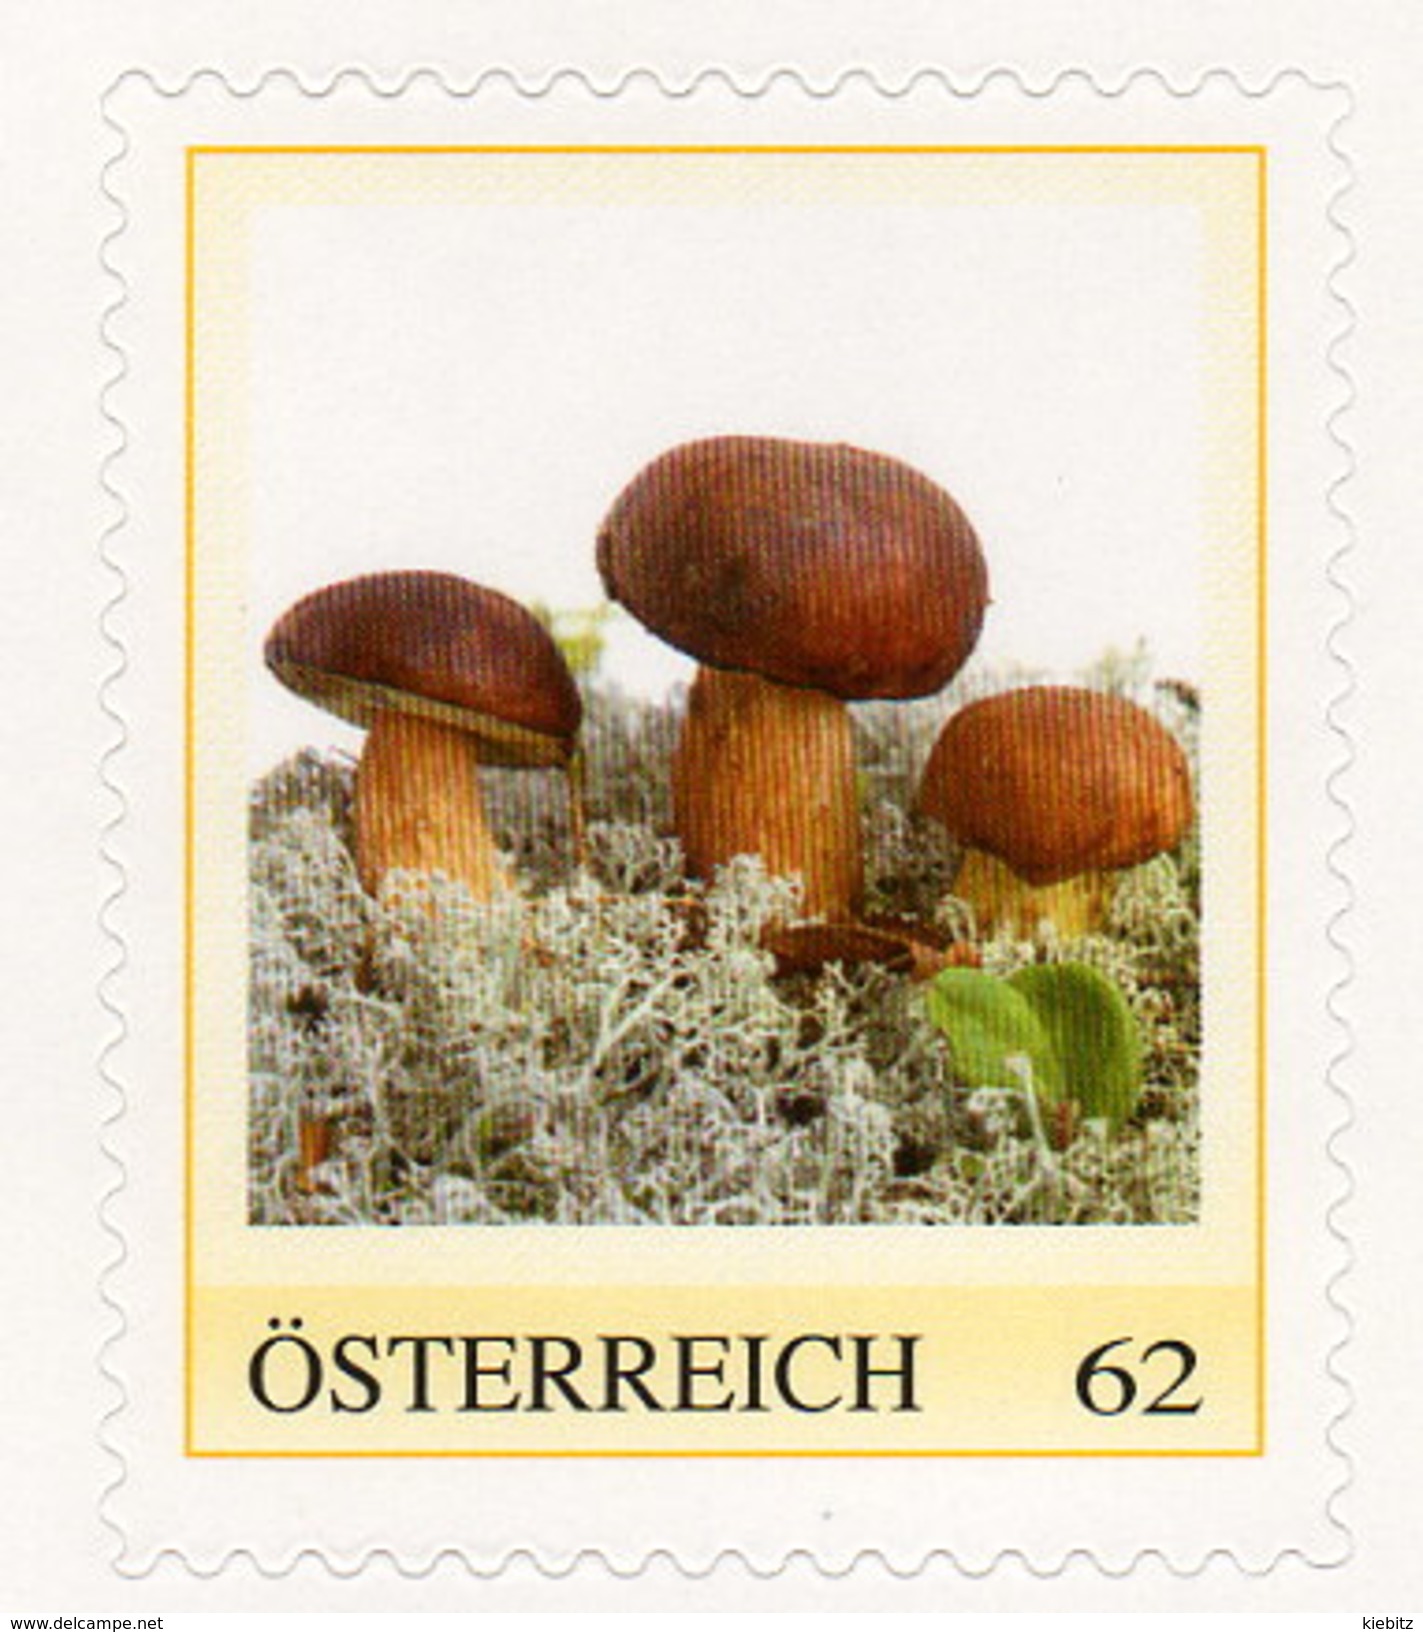 ÖSTERREICH 2011 ** Maronenröhrling / Xerocomus Badius - PM Personalized Stamp MNH - Pilze